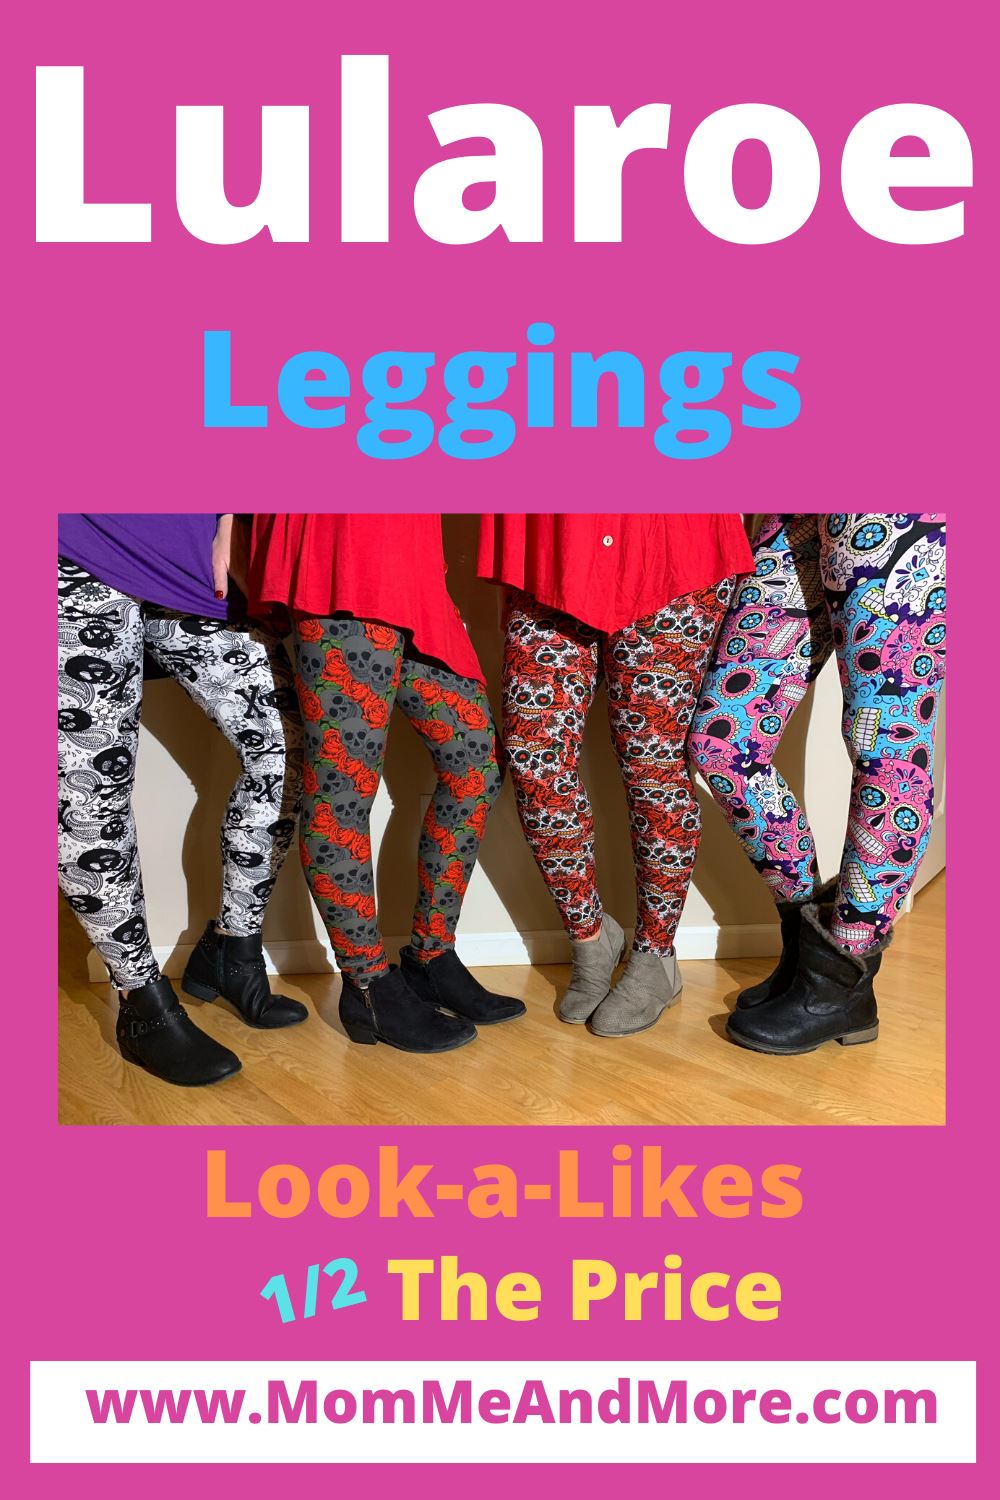 Clothing and Leggings Similar To Lularoe at Half the Price